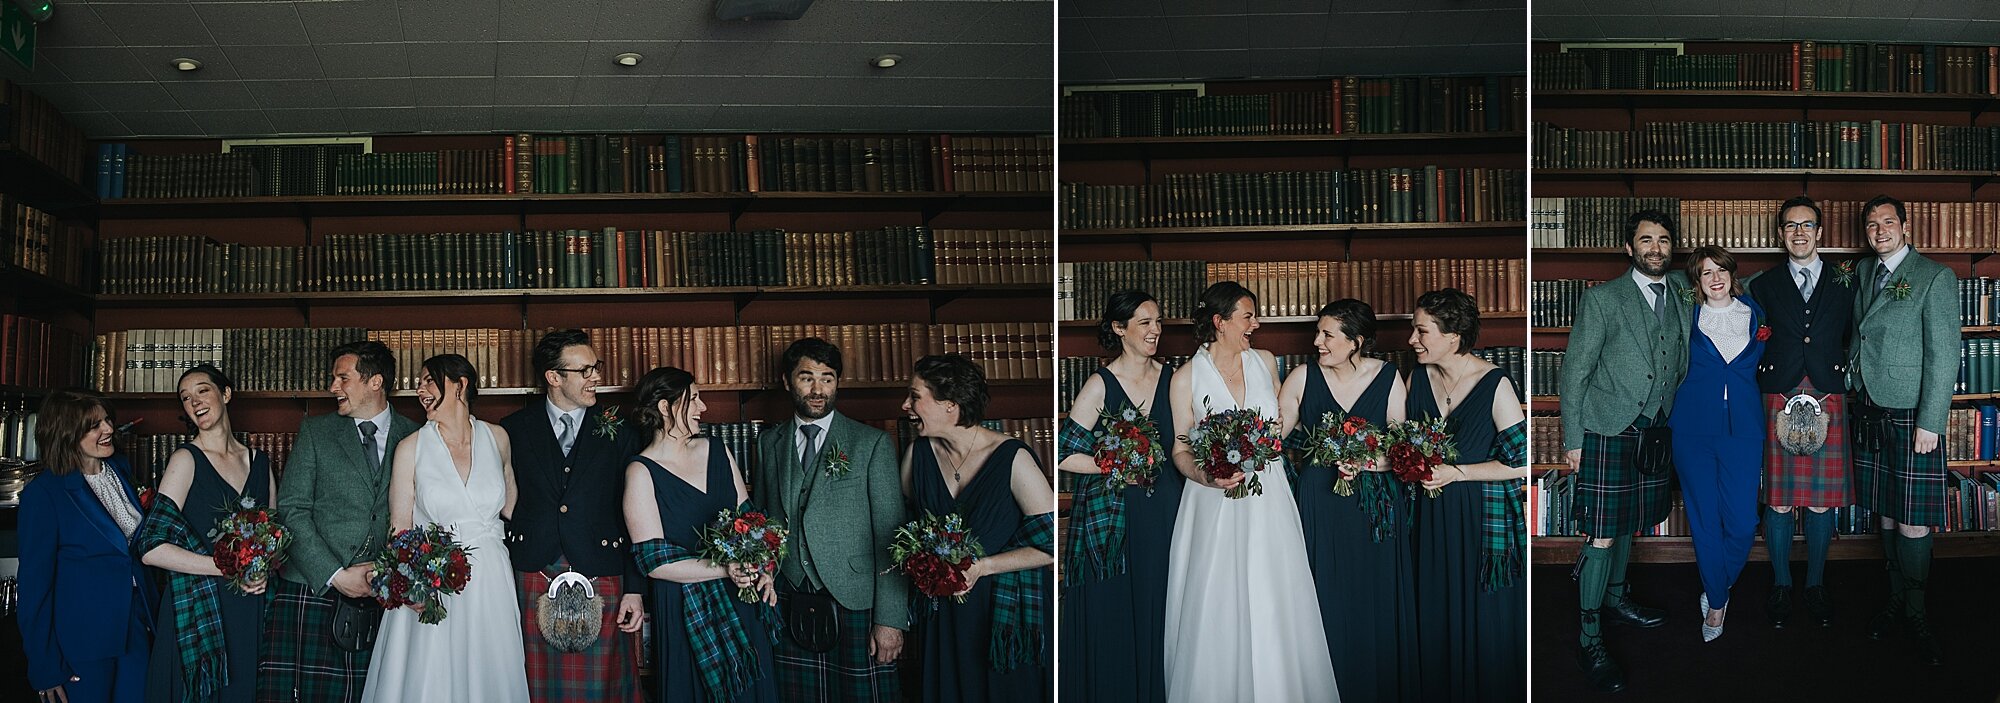 Edinburgh wedding-28.jpg